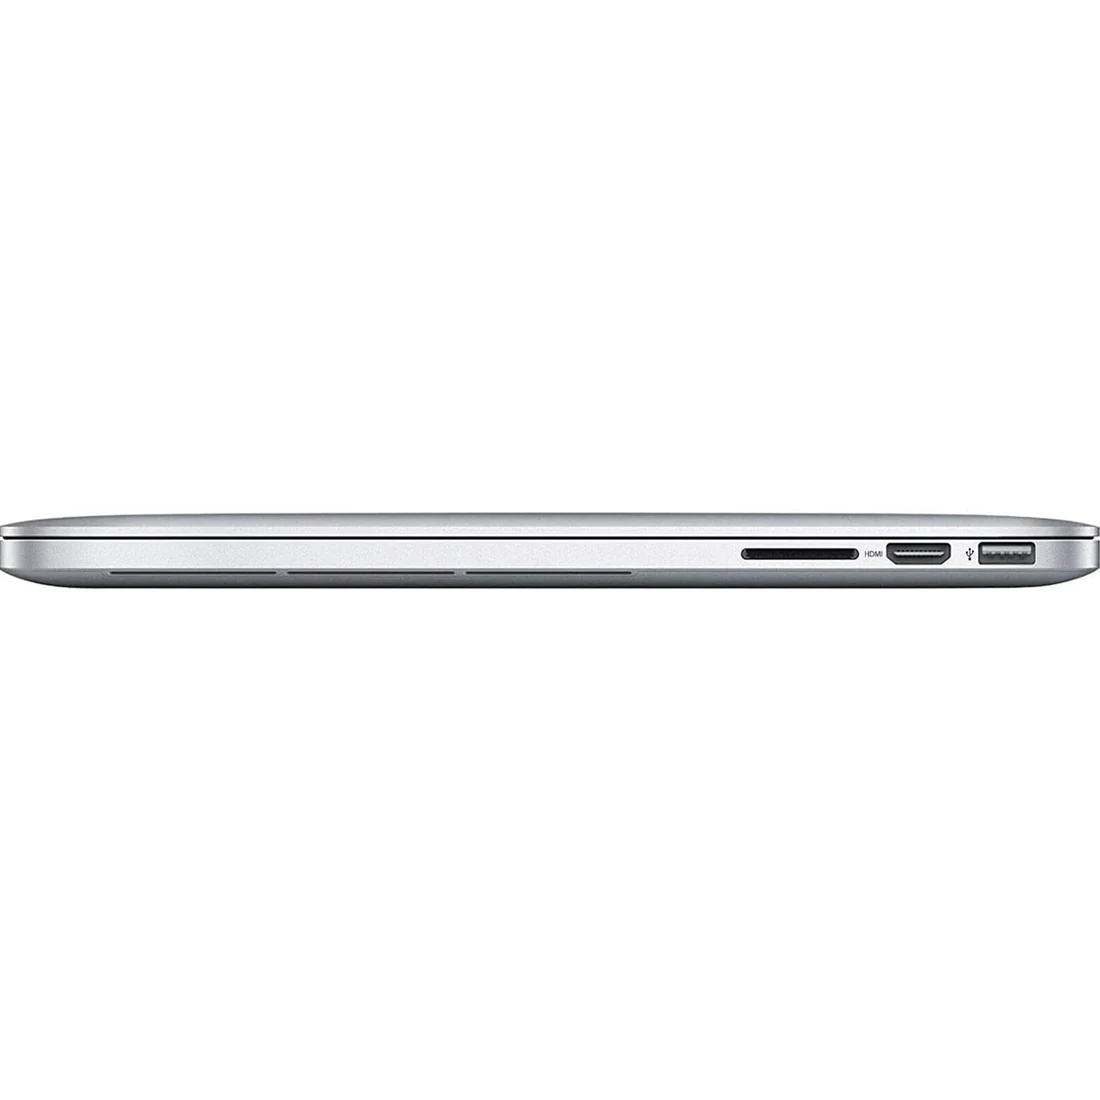 Apple MacBook A1398, 2014, i7, 8 GB, 512 SSD, Silver